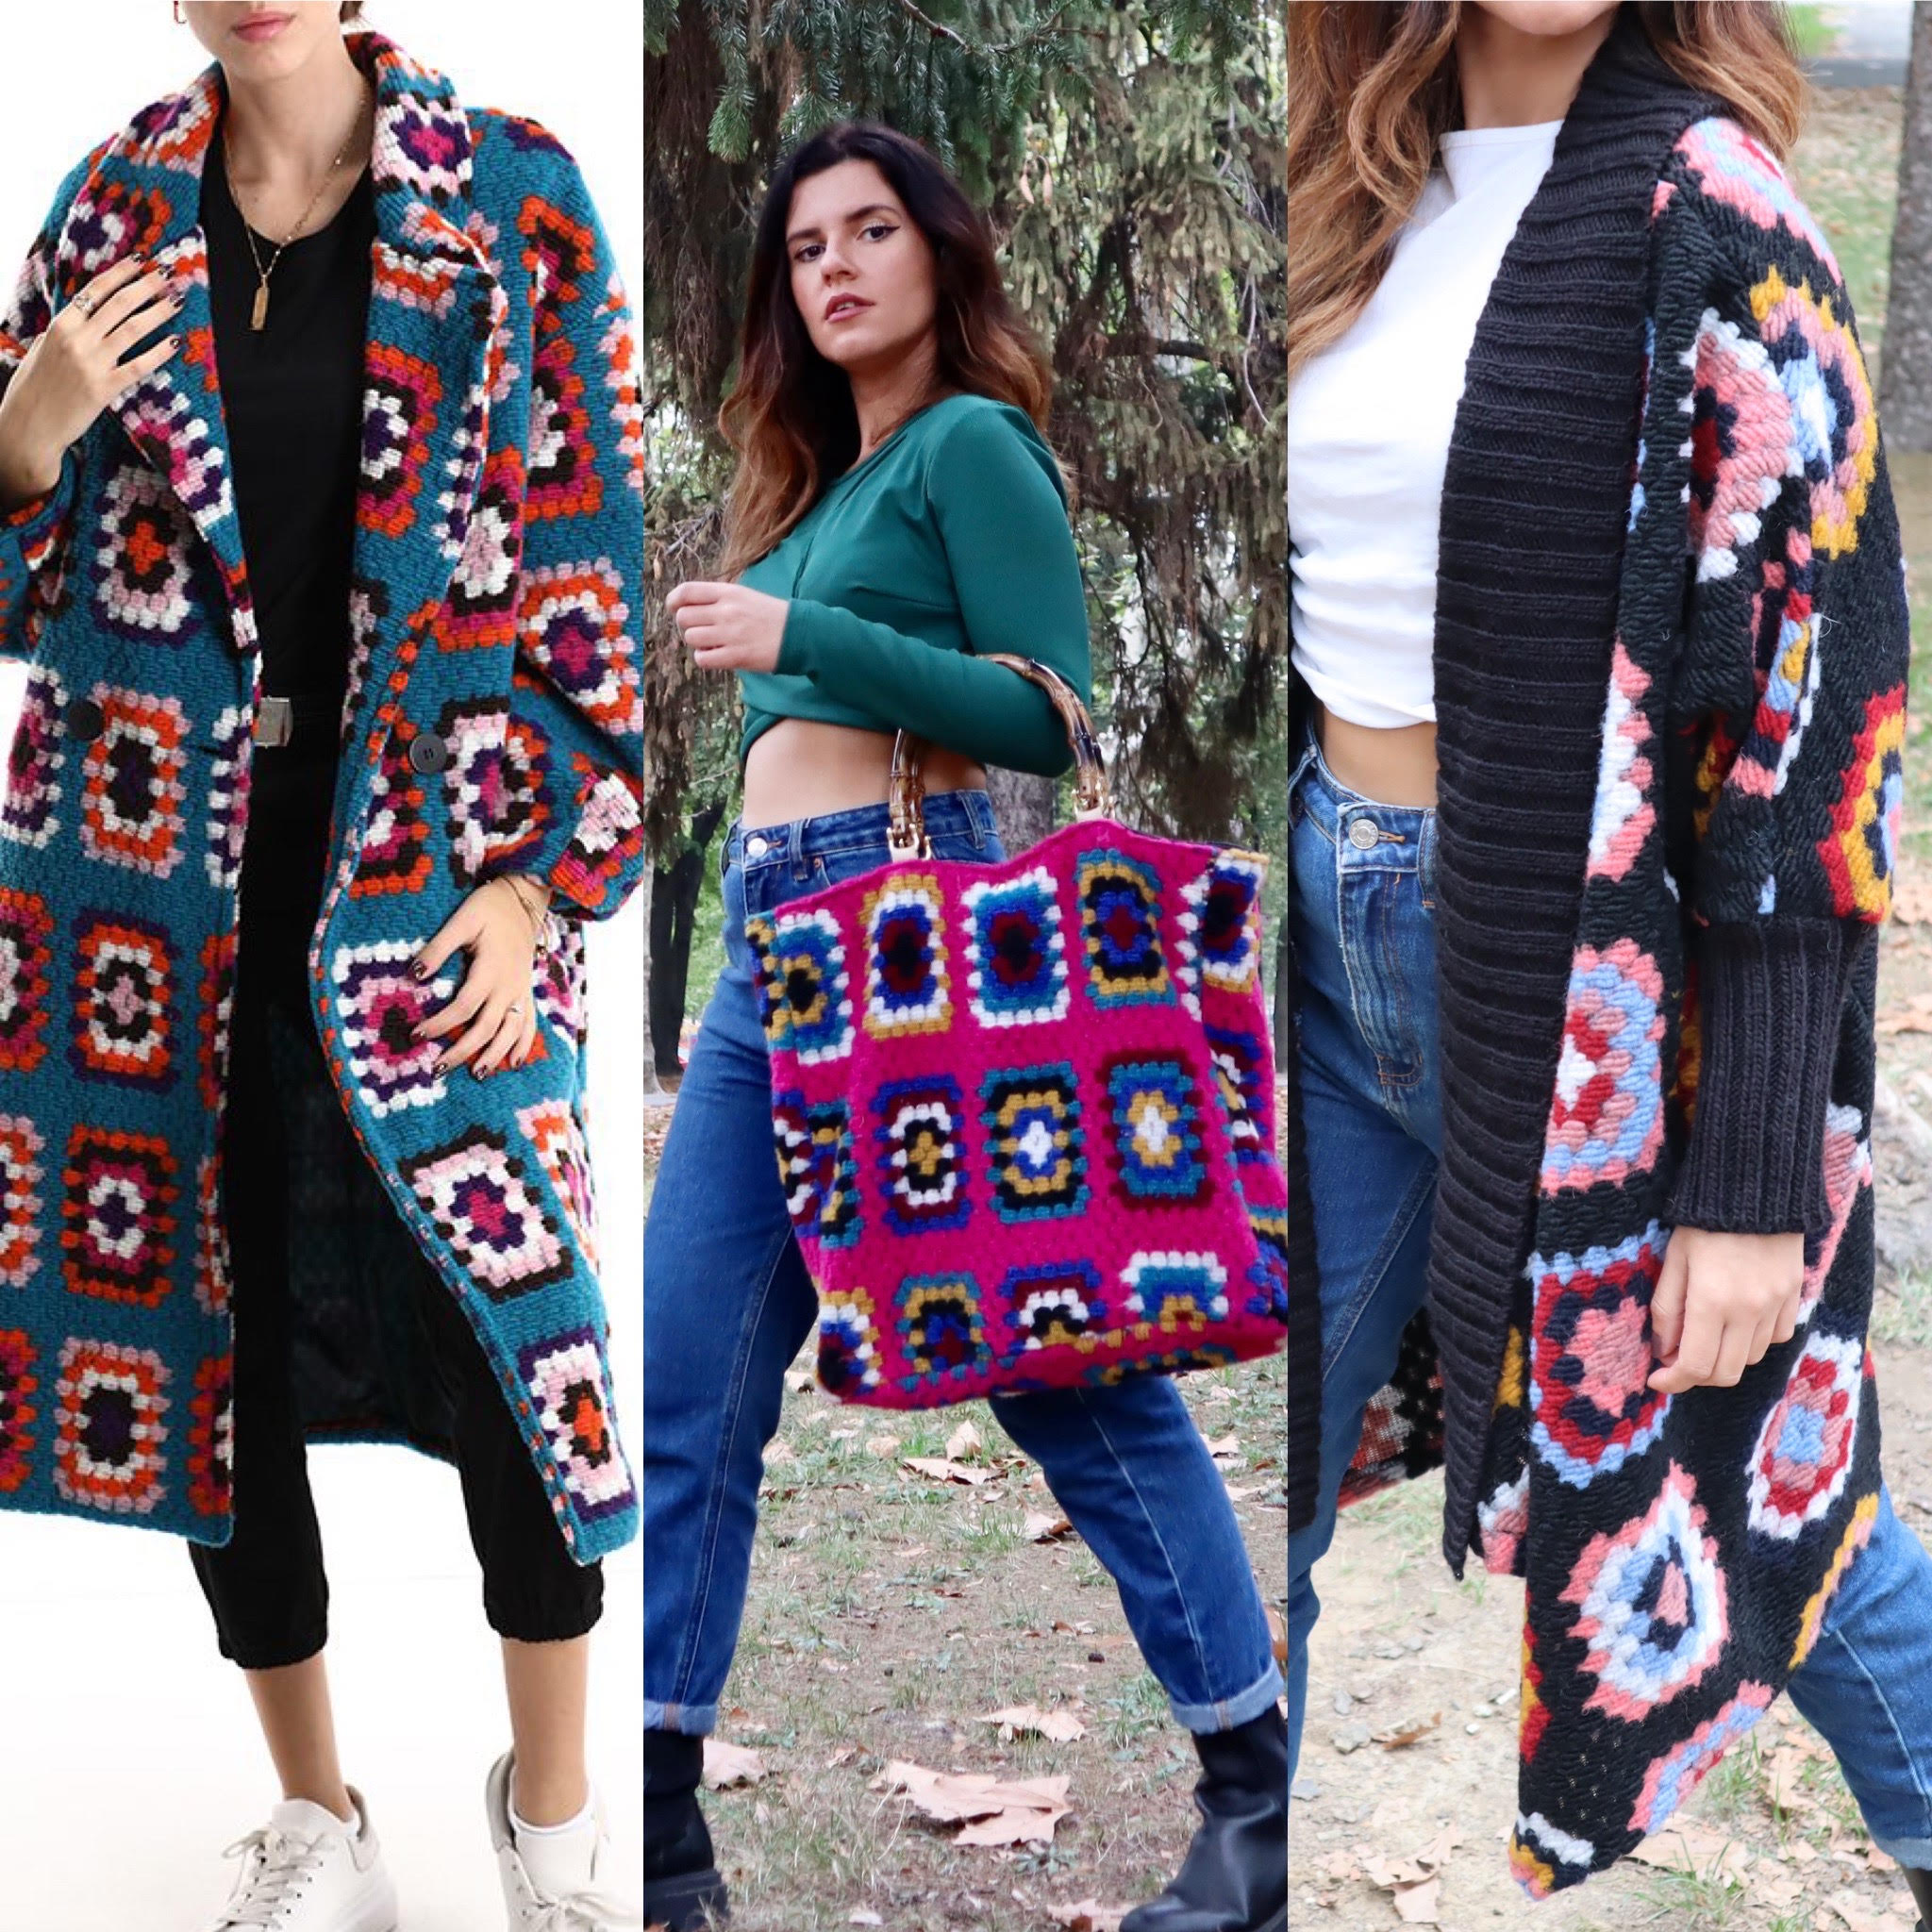 The Crochet Crochet Print is an autumn winter fashion trend 2021/2022